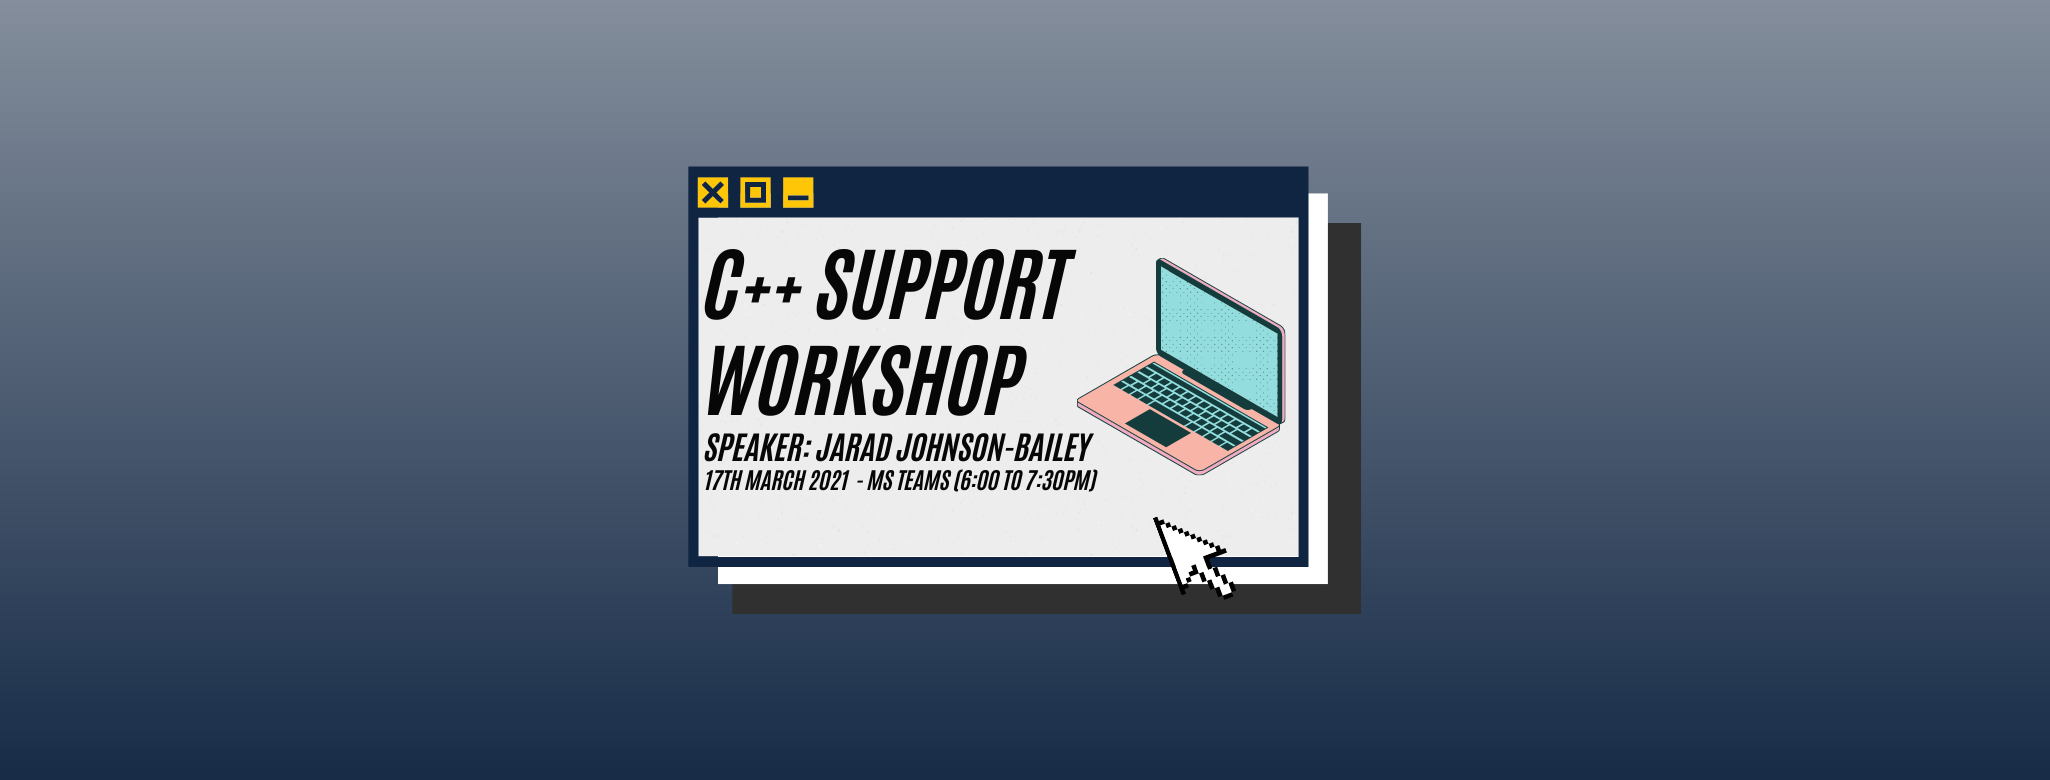 C++ Support Workshop Header